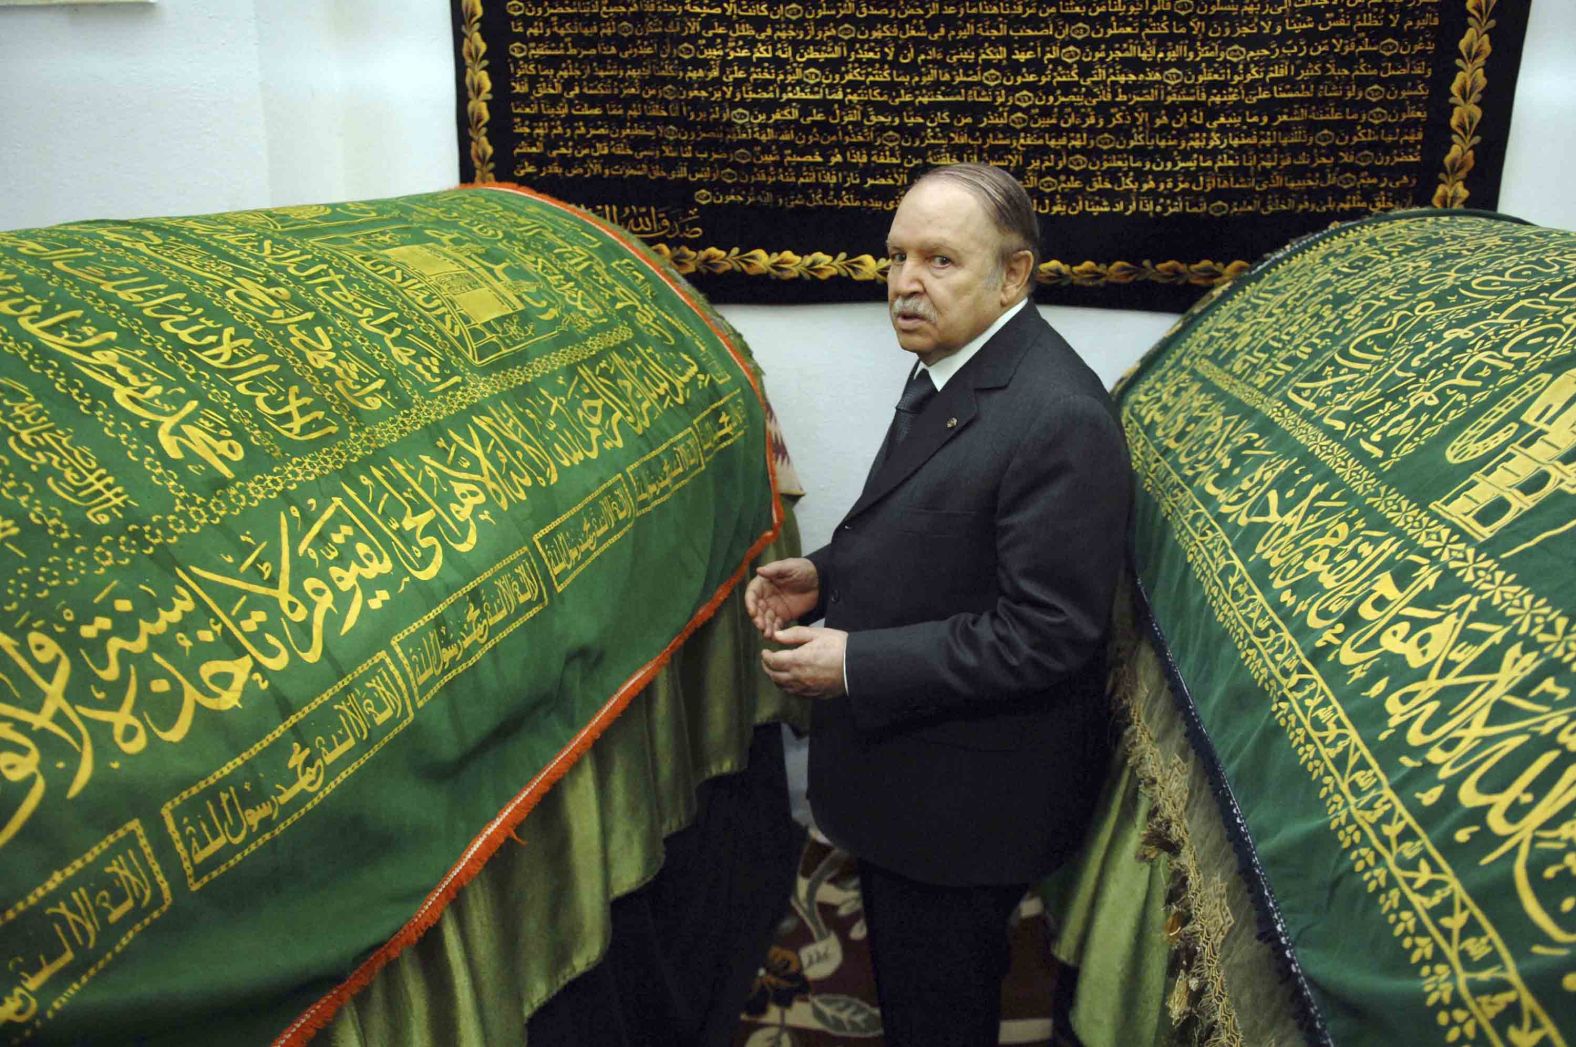 Bouteflika prays at the mausoleum of Tlemcen, Algeria, in April 2011.